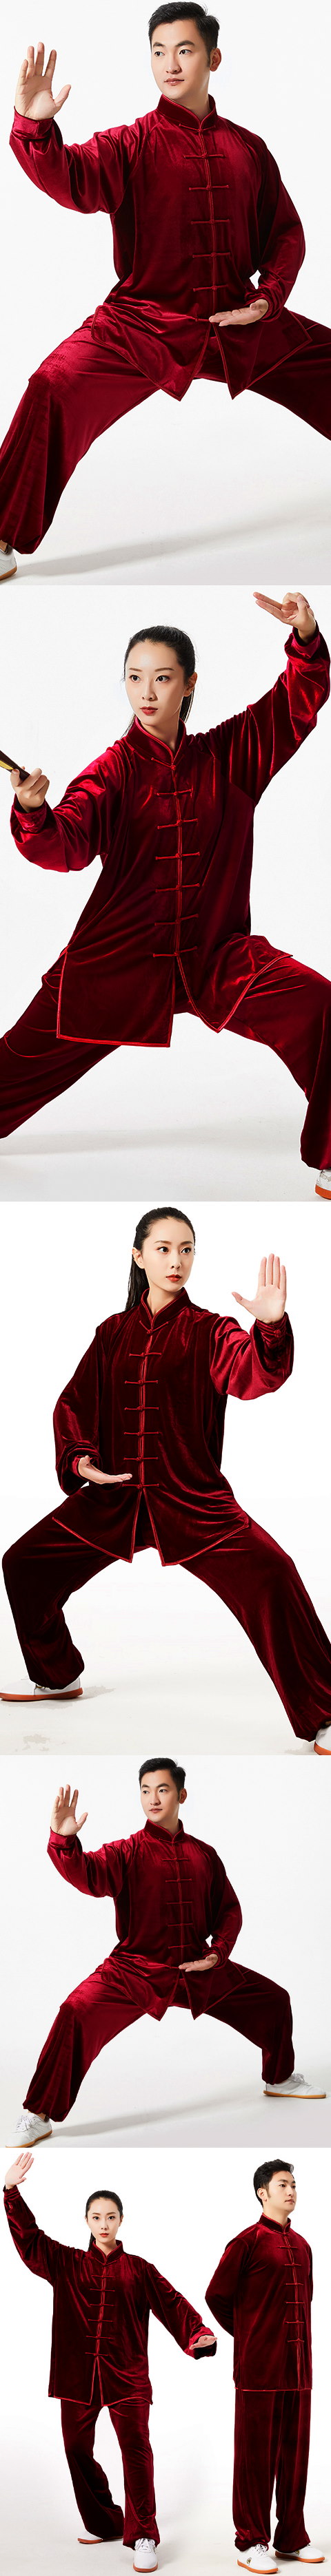 Professional Taichi Kungfu Uniform with Pants - Velvet - Maroon (RM)